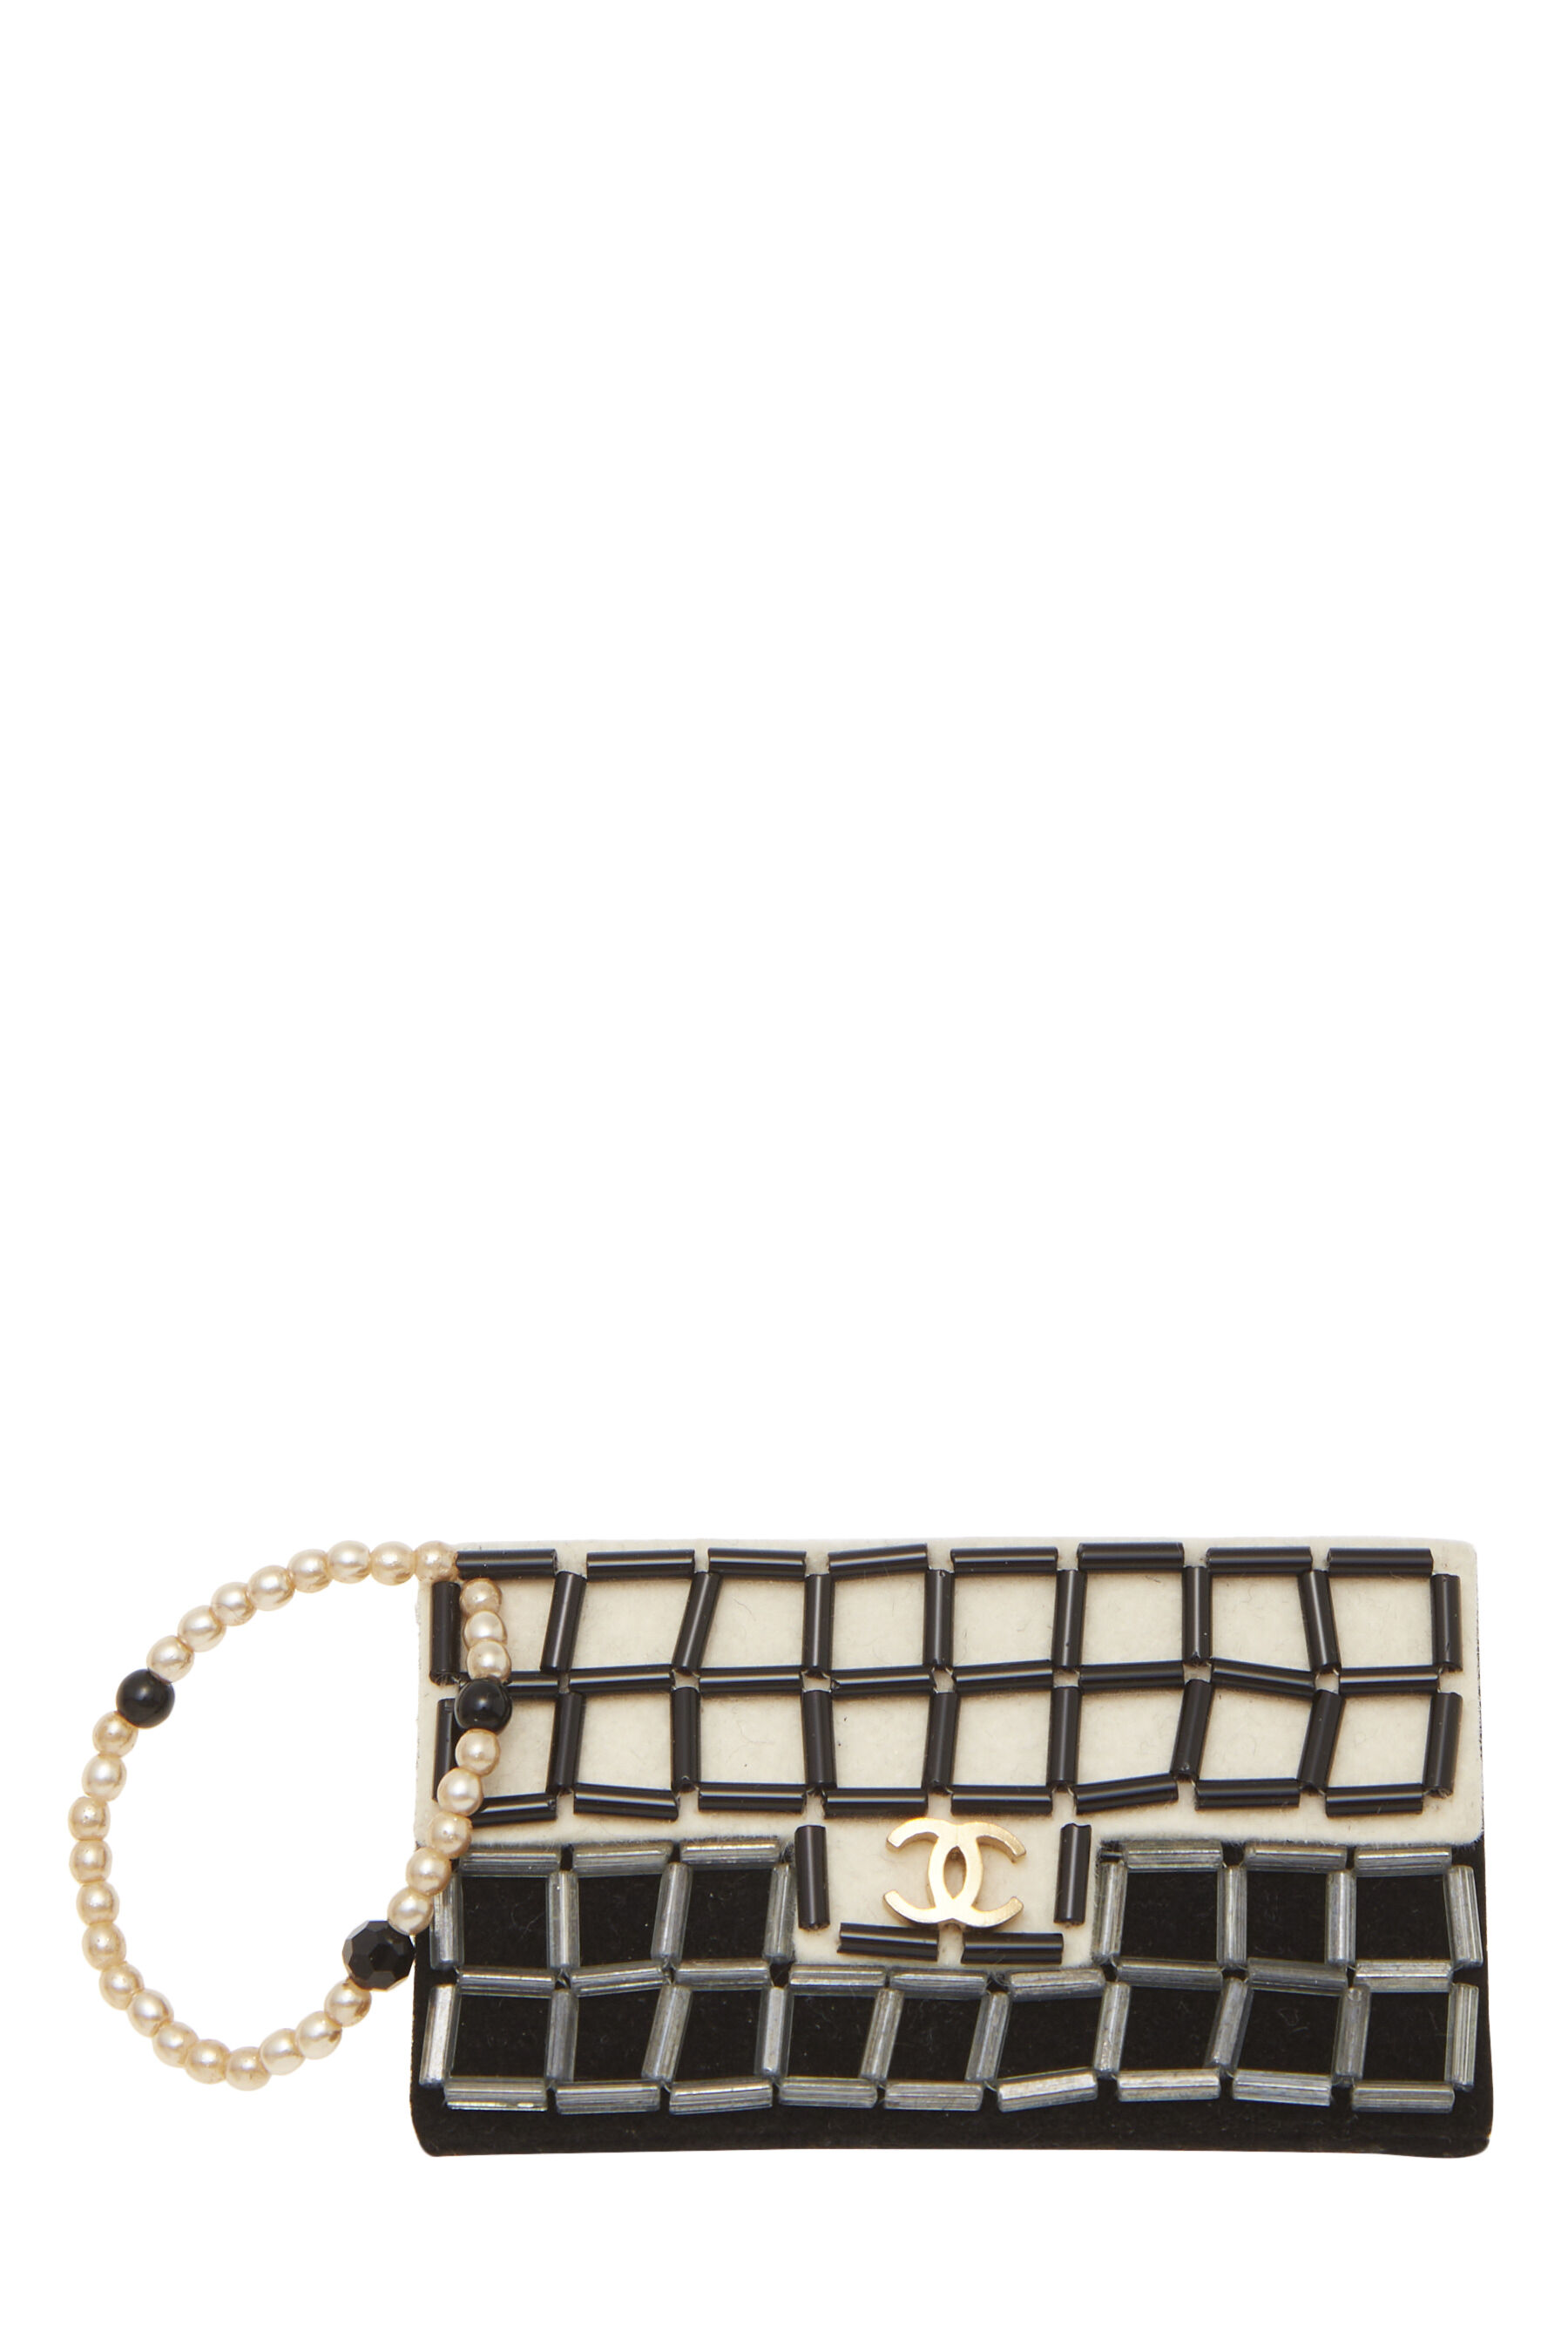 Chanel Black & White Felt Flap Bag Pin